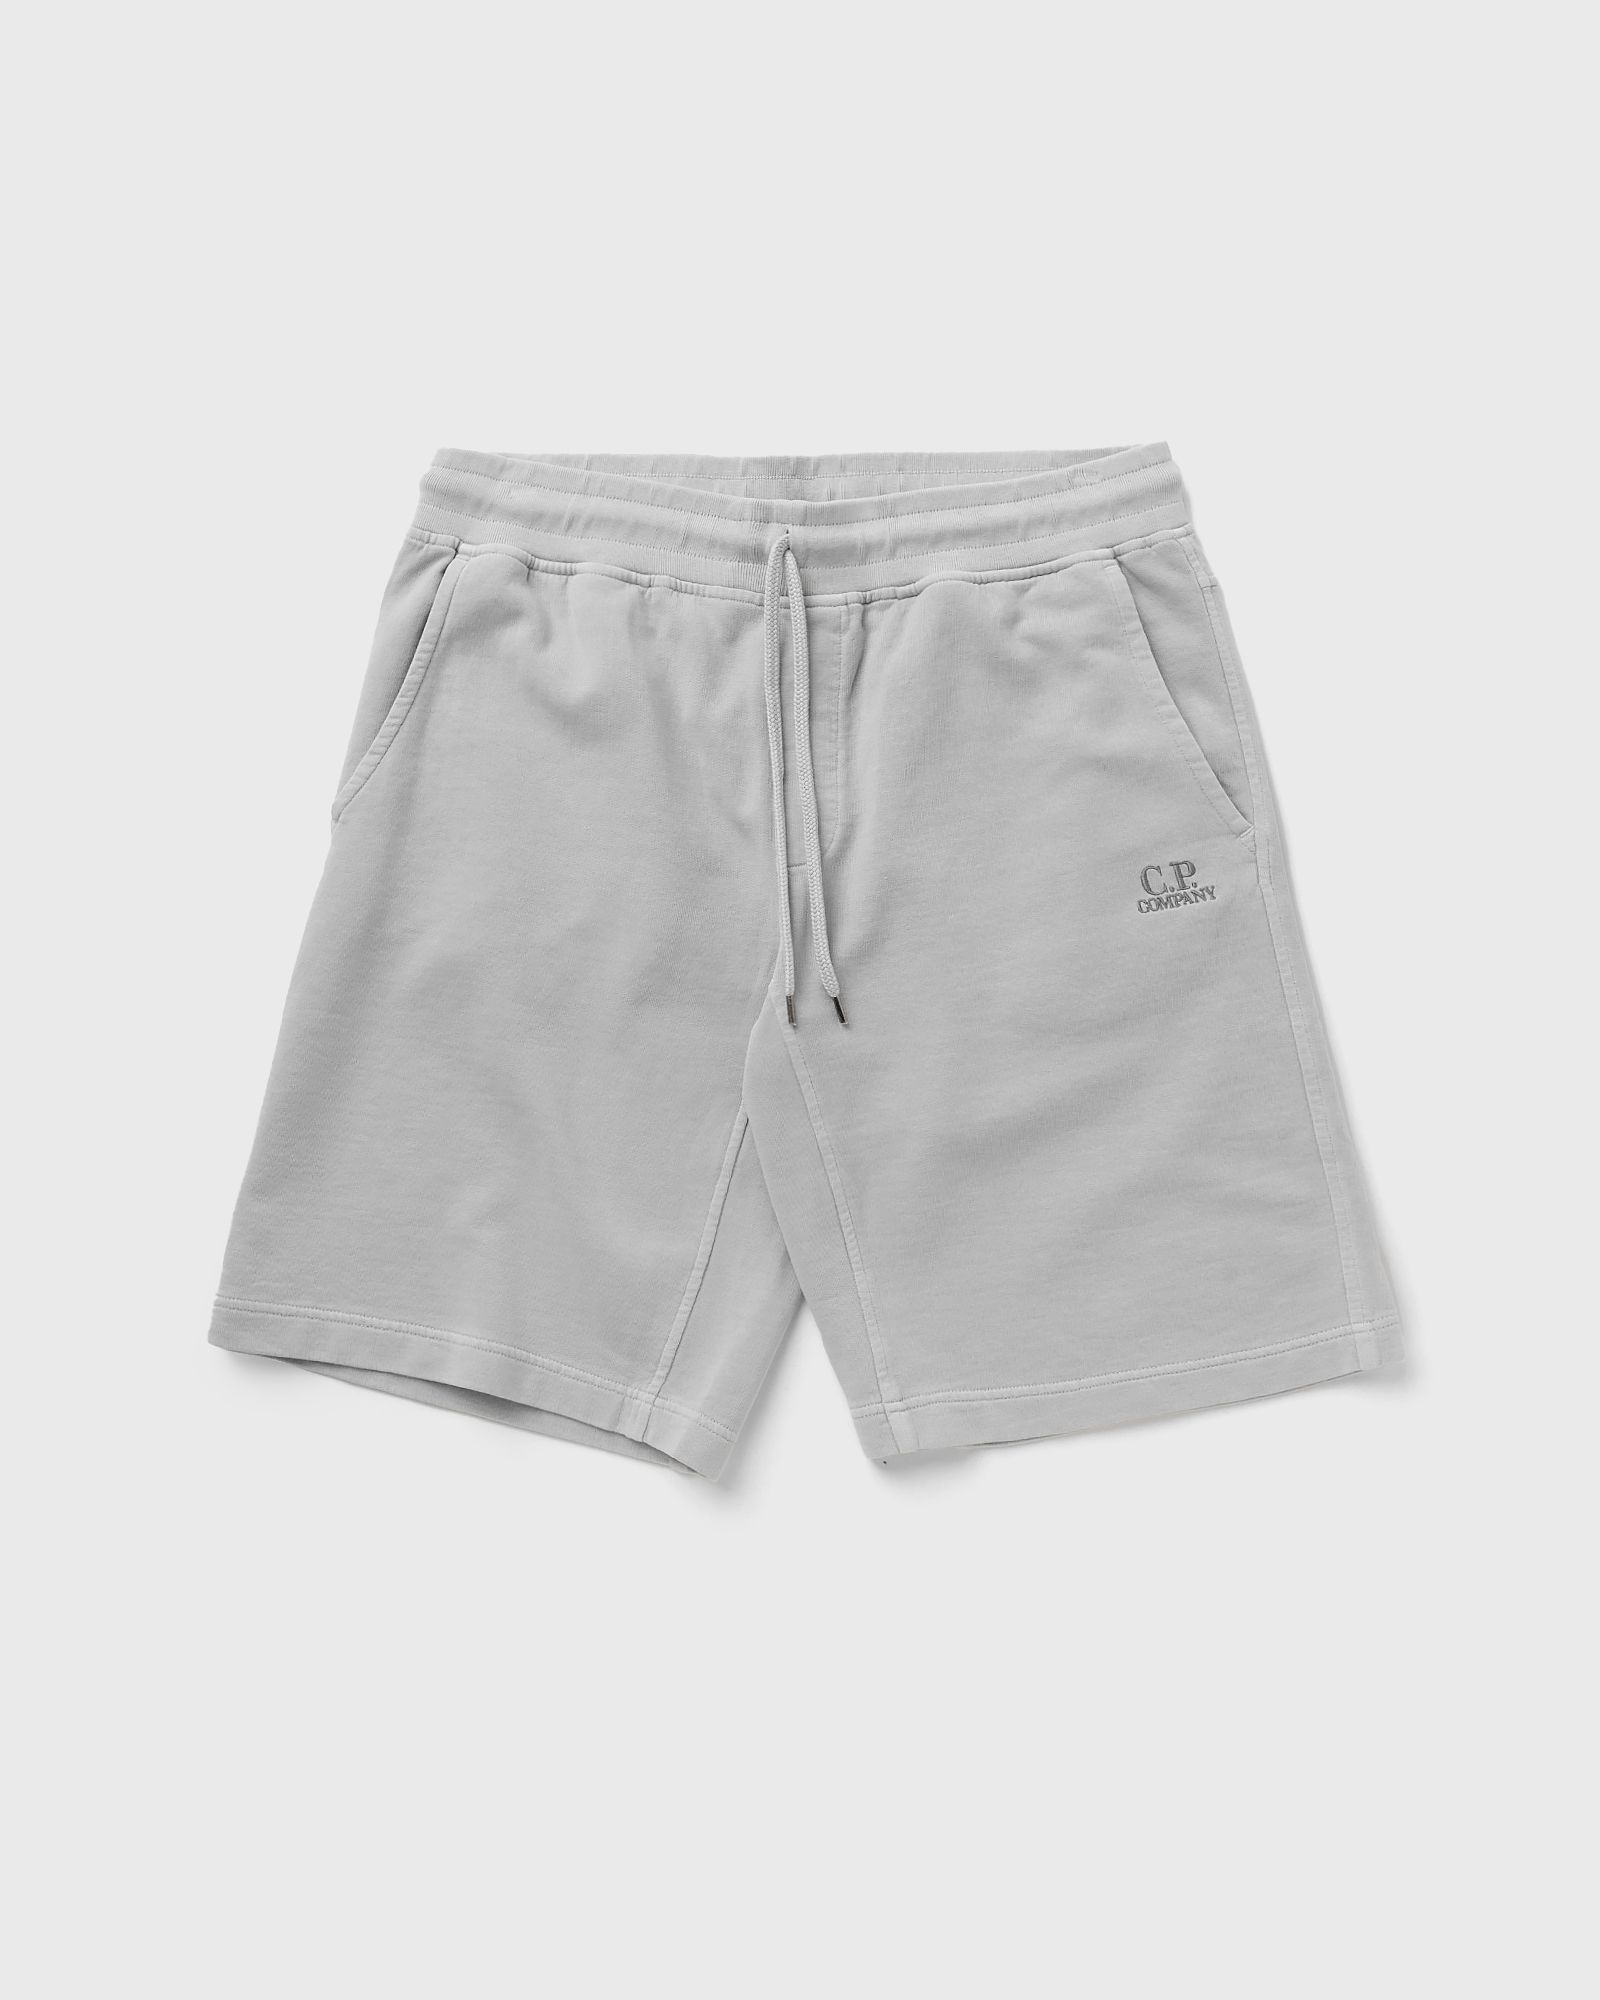 c.p. company cotton fleece shorts men casual shorts|sport & team